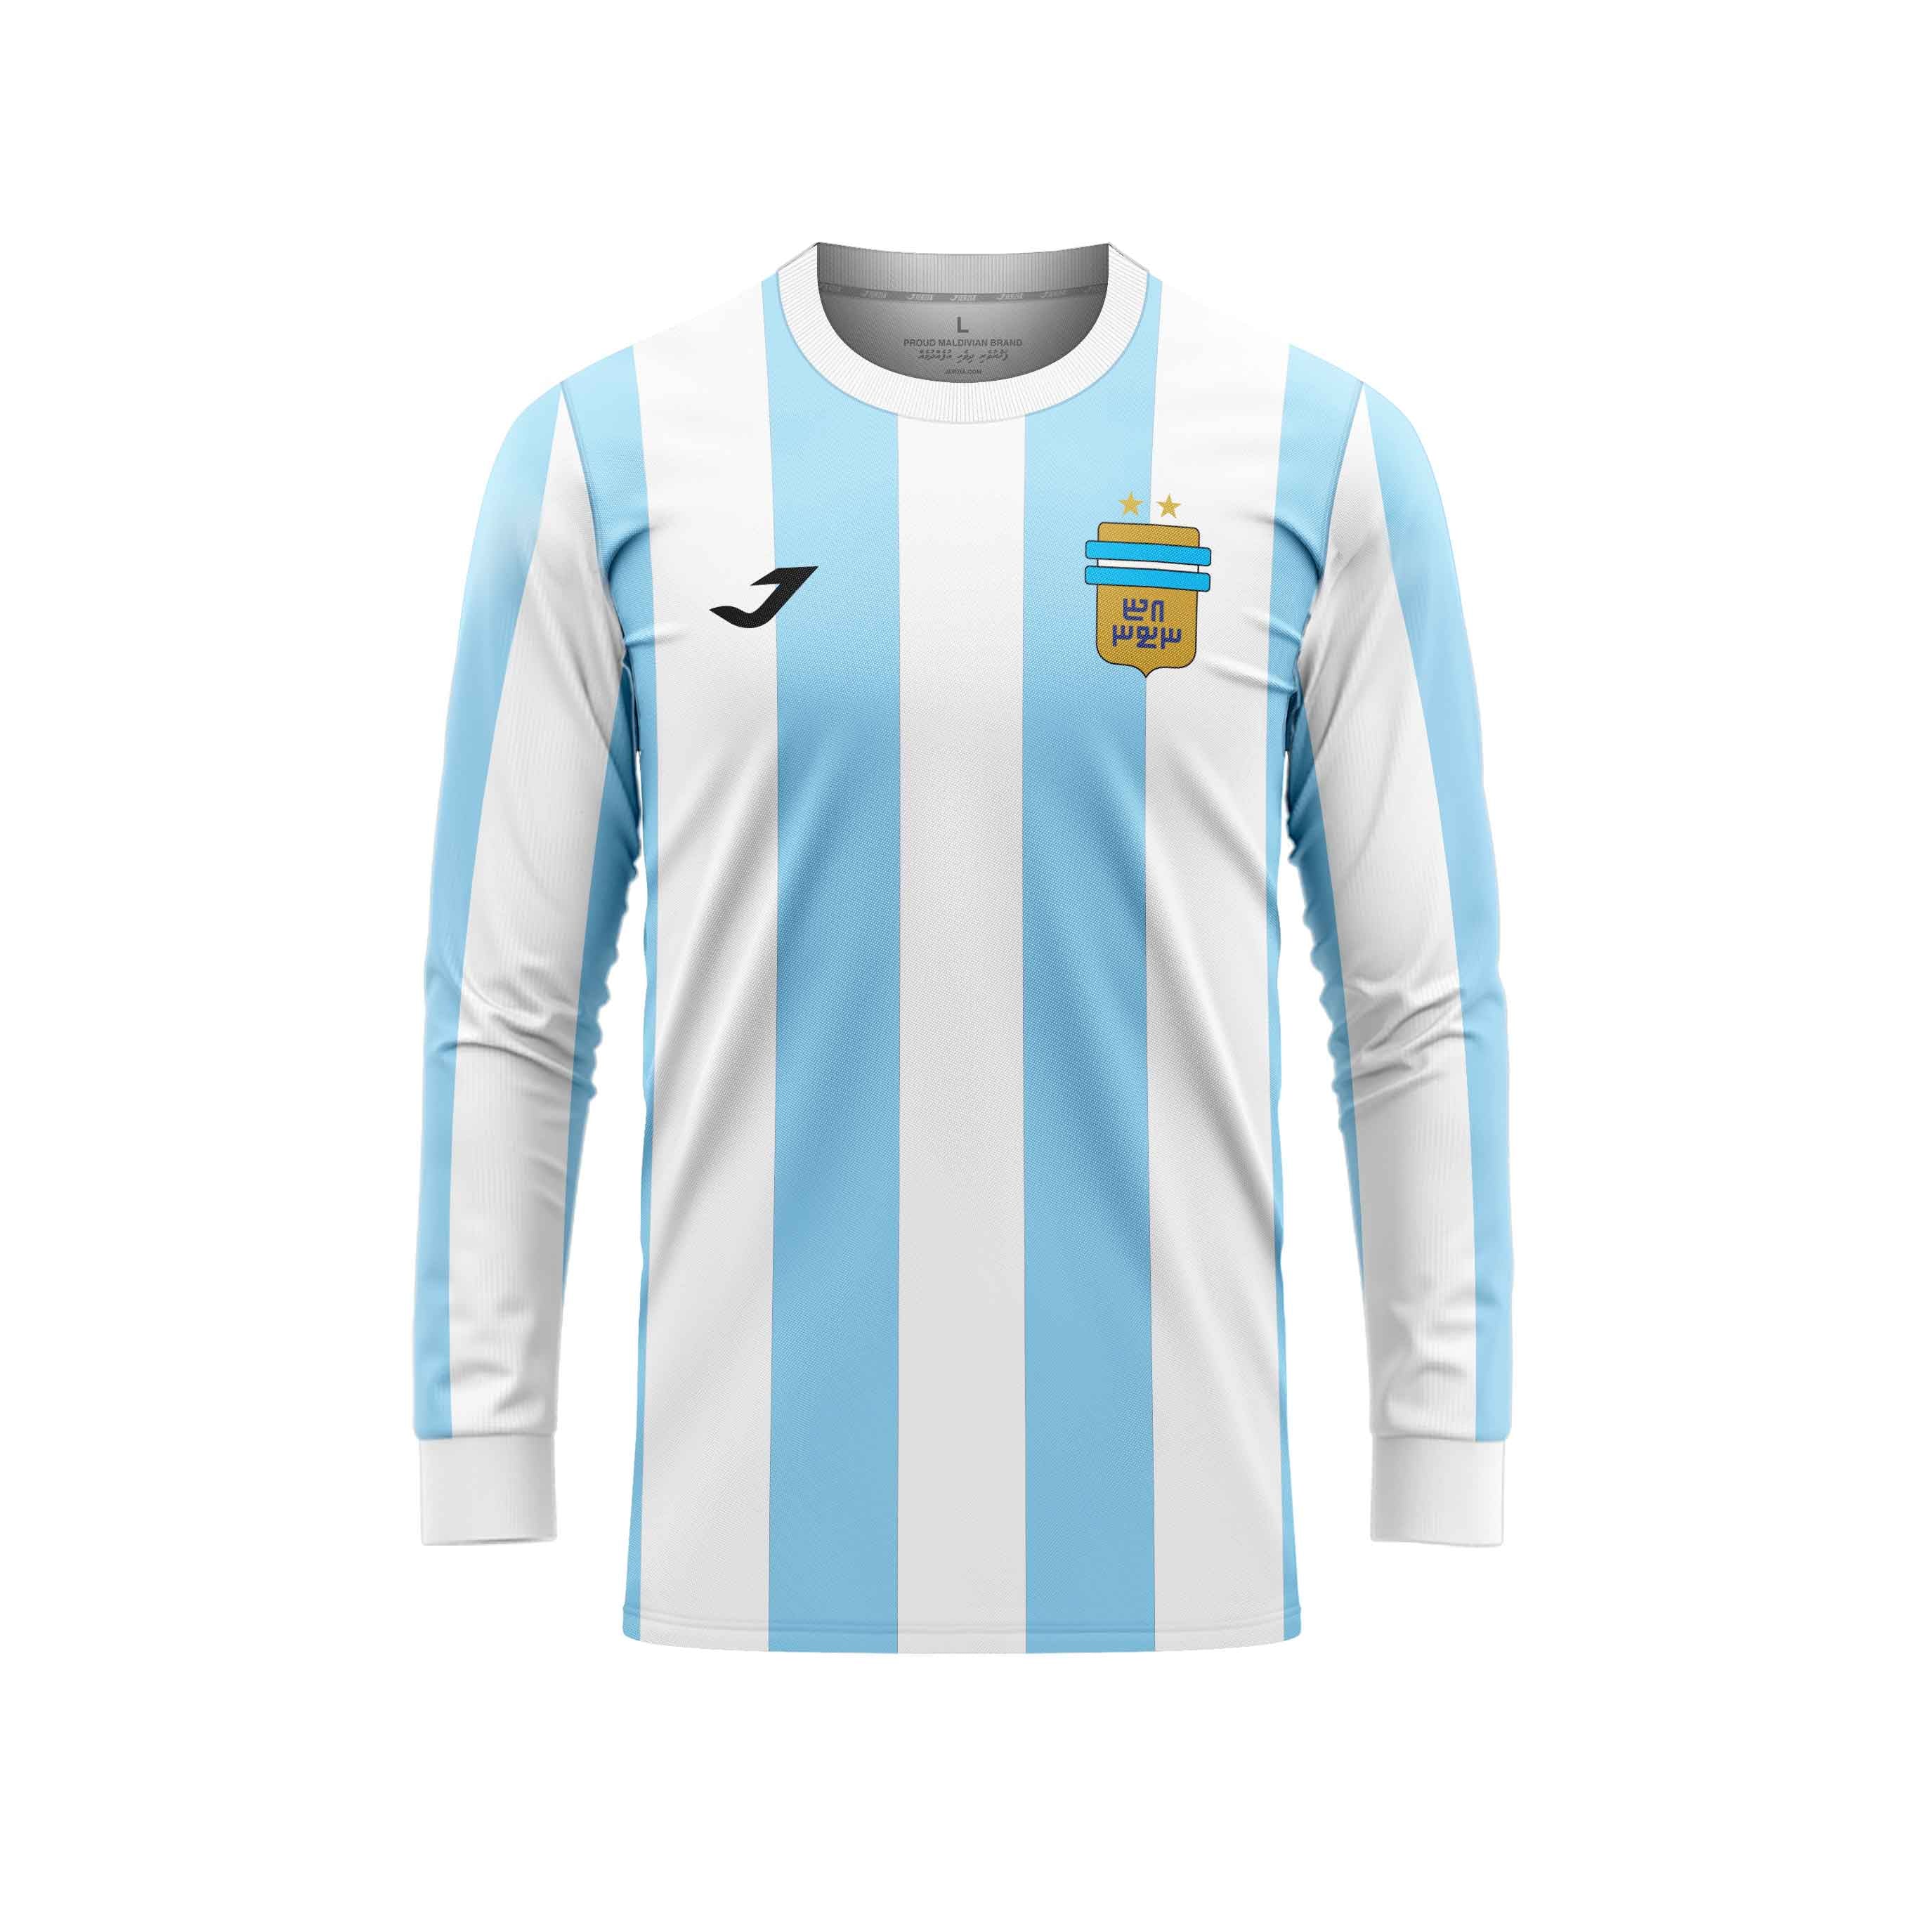 Argentina Home Kit LS